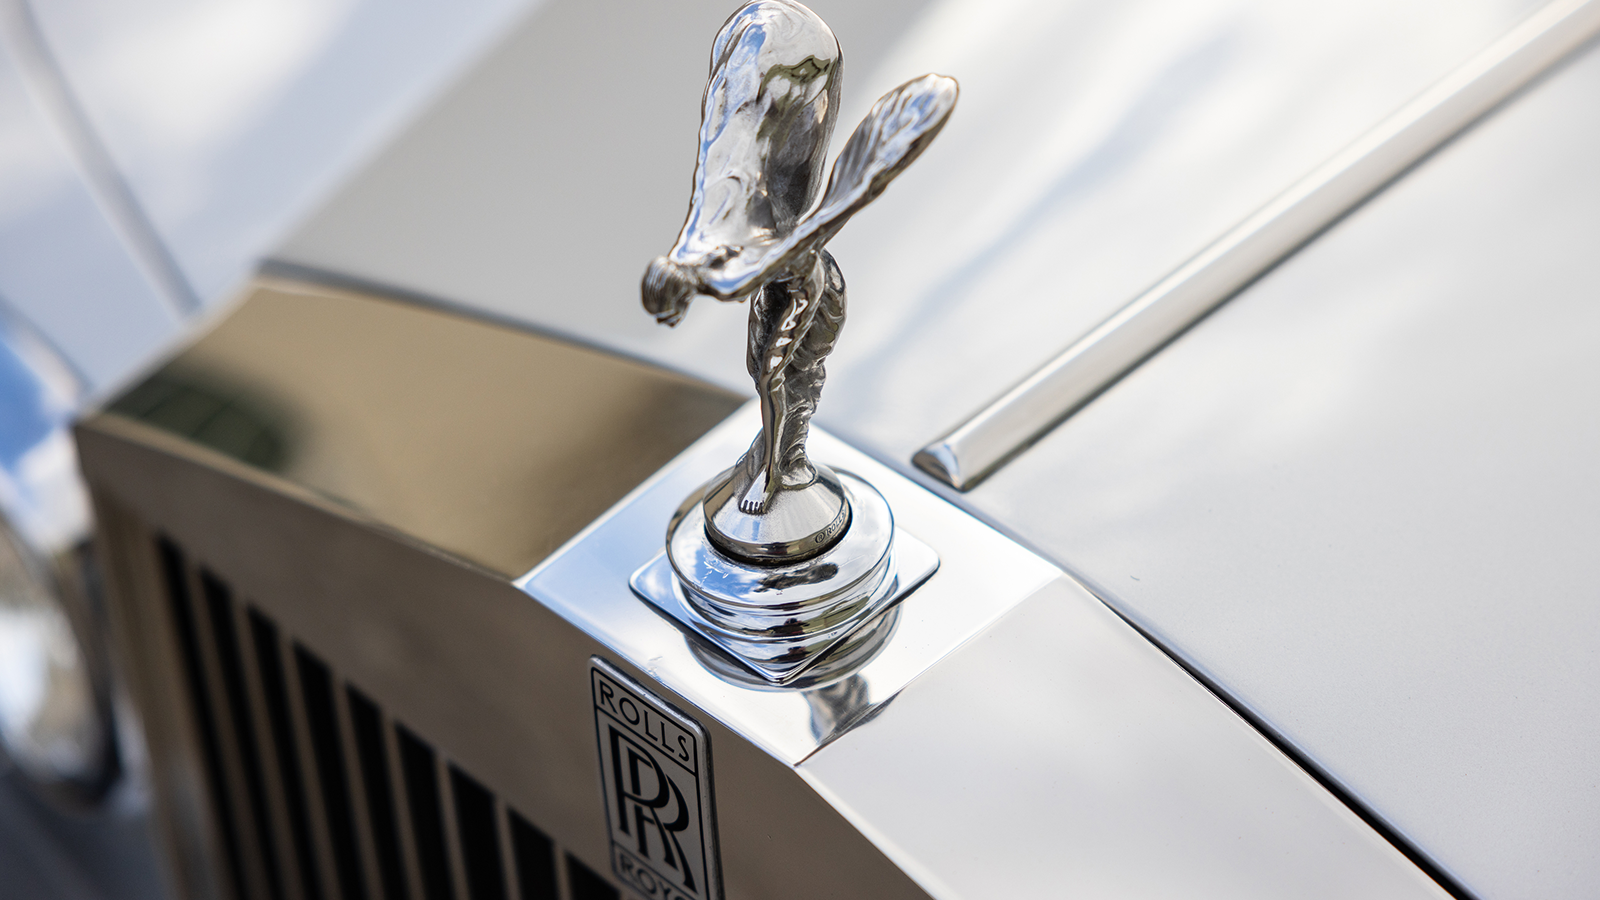 Freddie Mercury’s classic Rolls-Royce is for sale